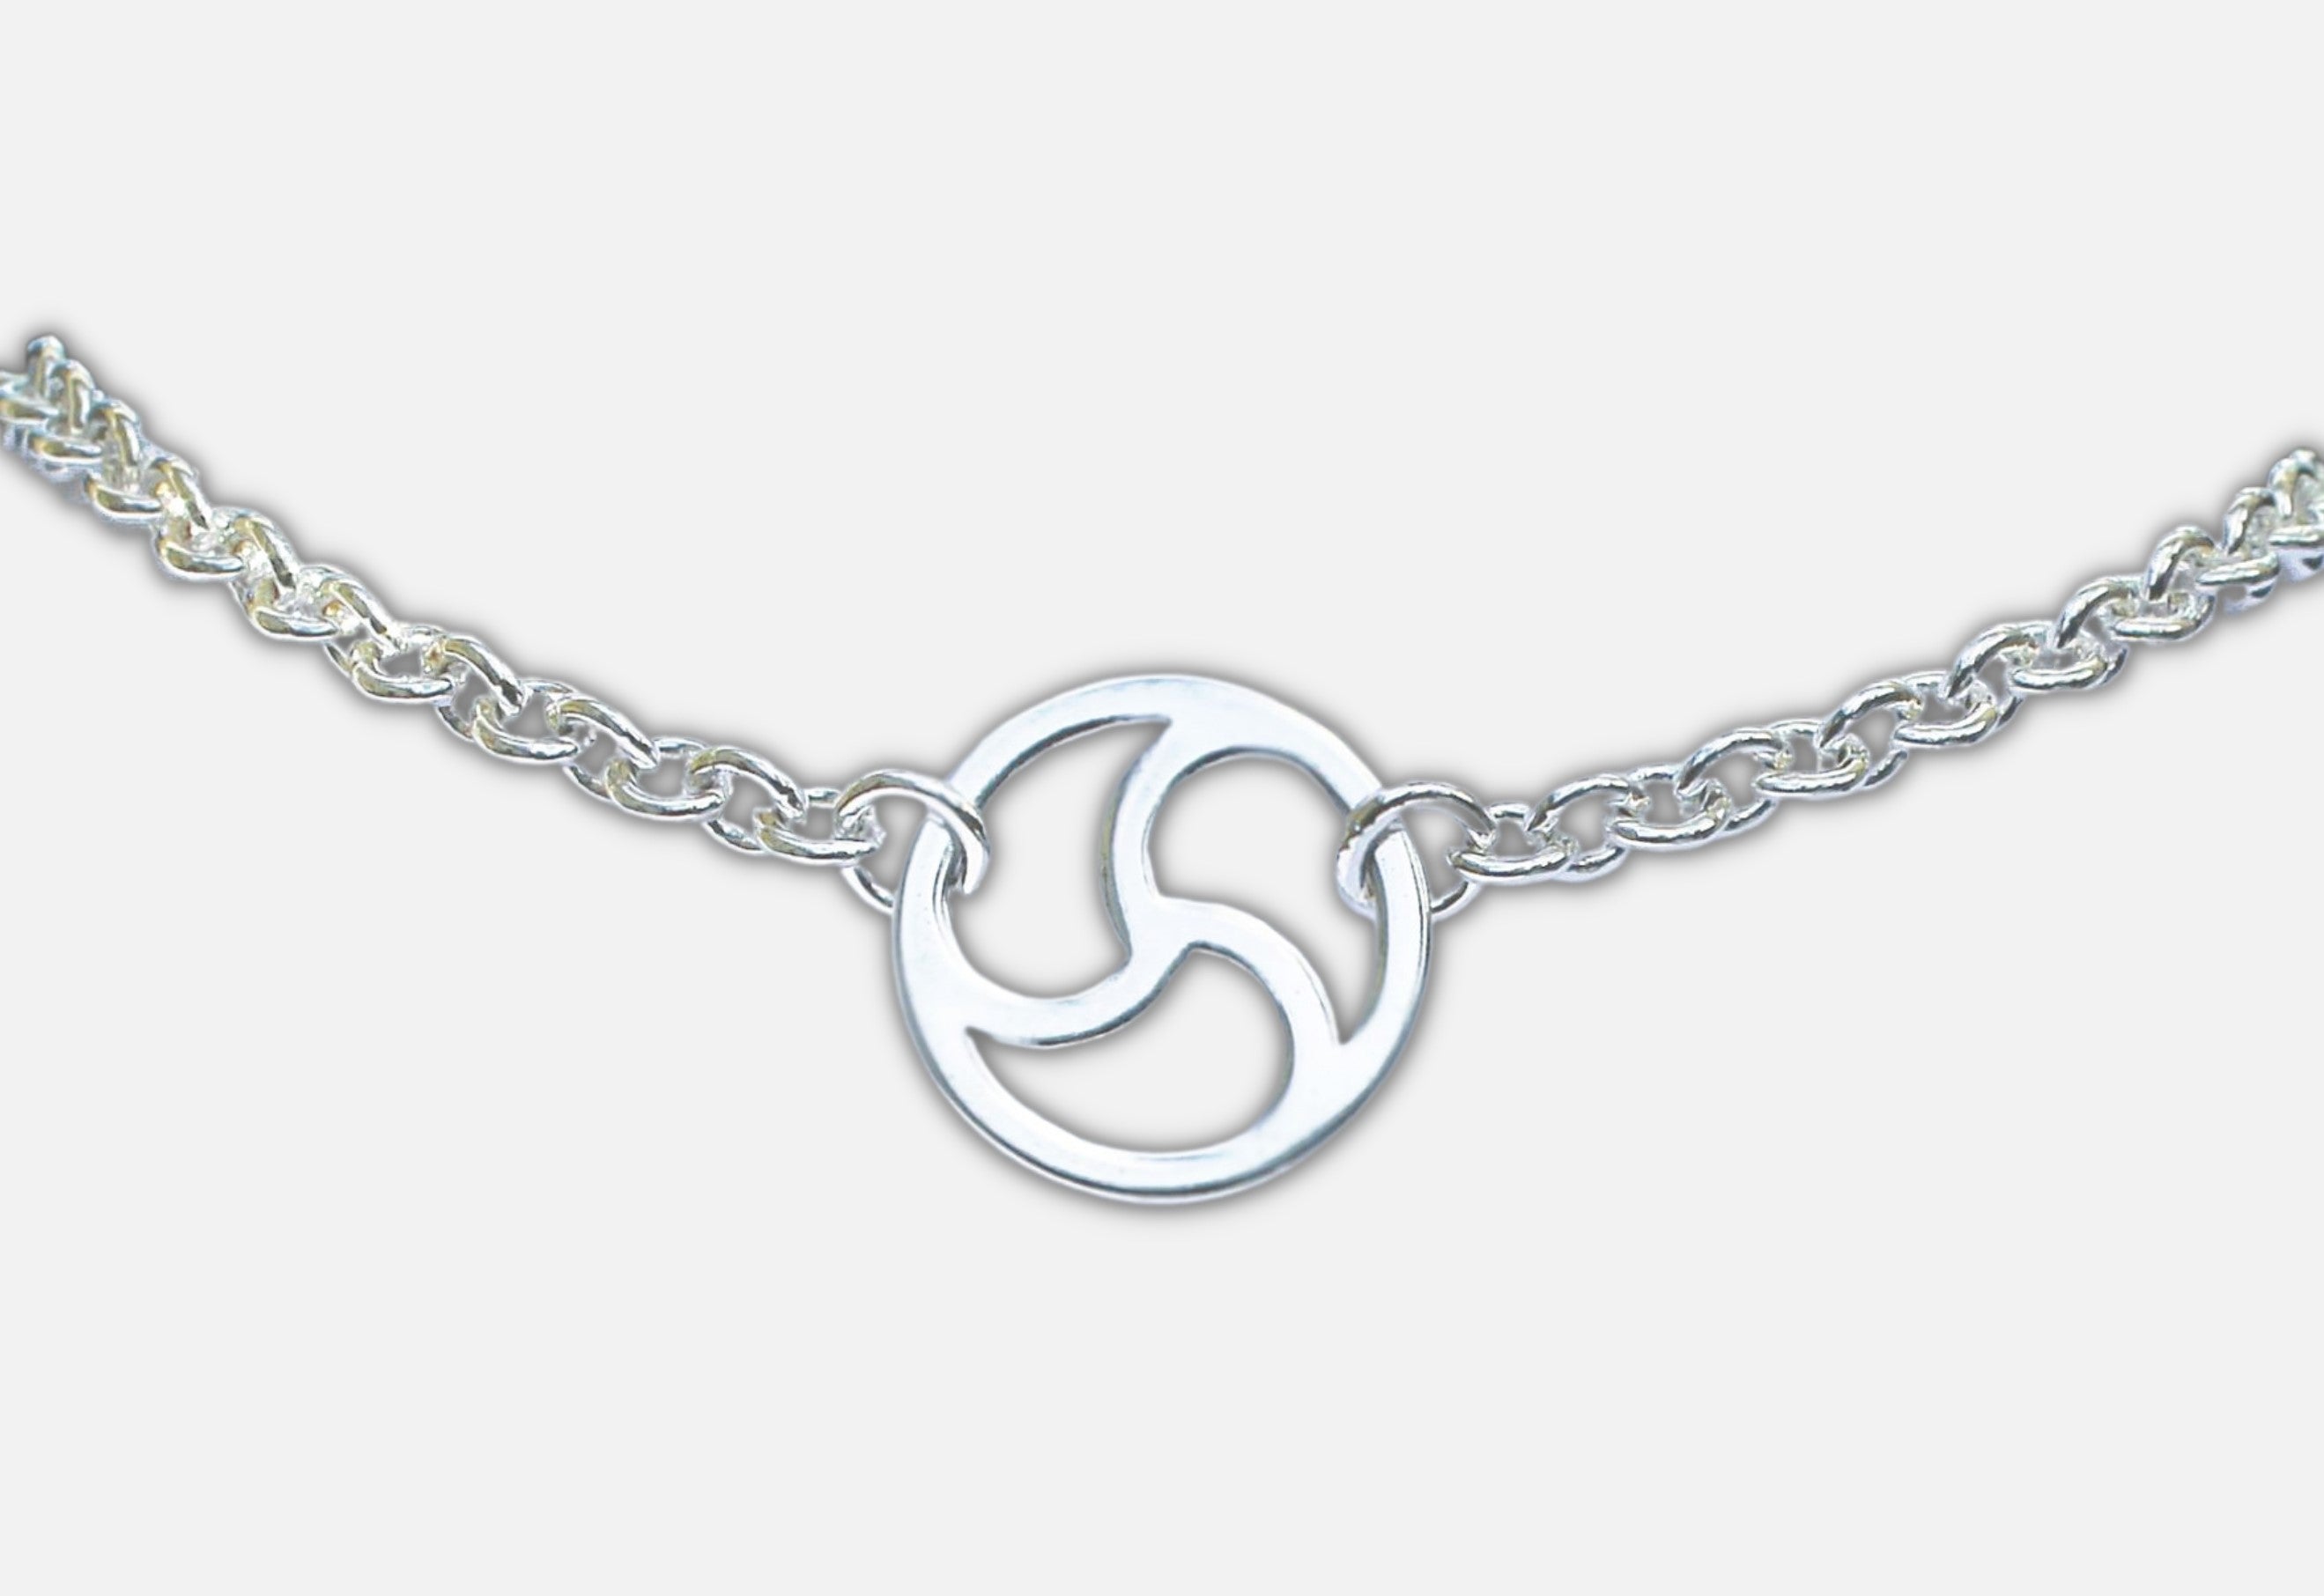 Sterling Silver, Day Collar, Discreet BDSM Symbol Medium Heavy Chain, Choker Style, Handmade